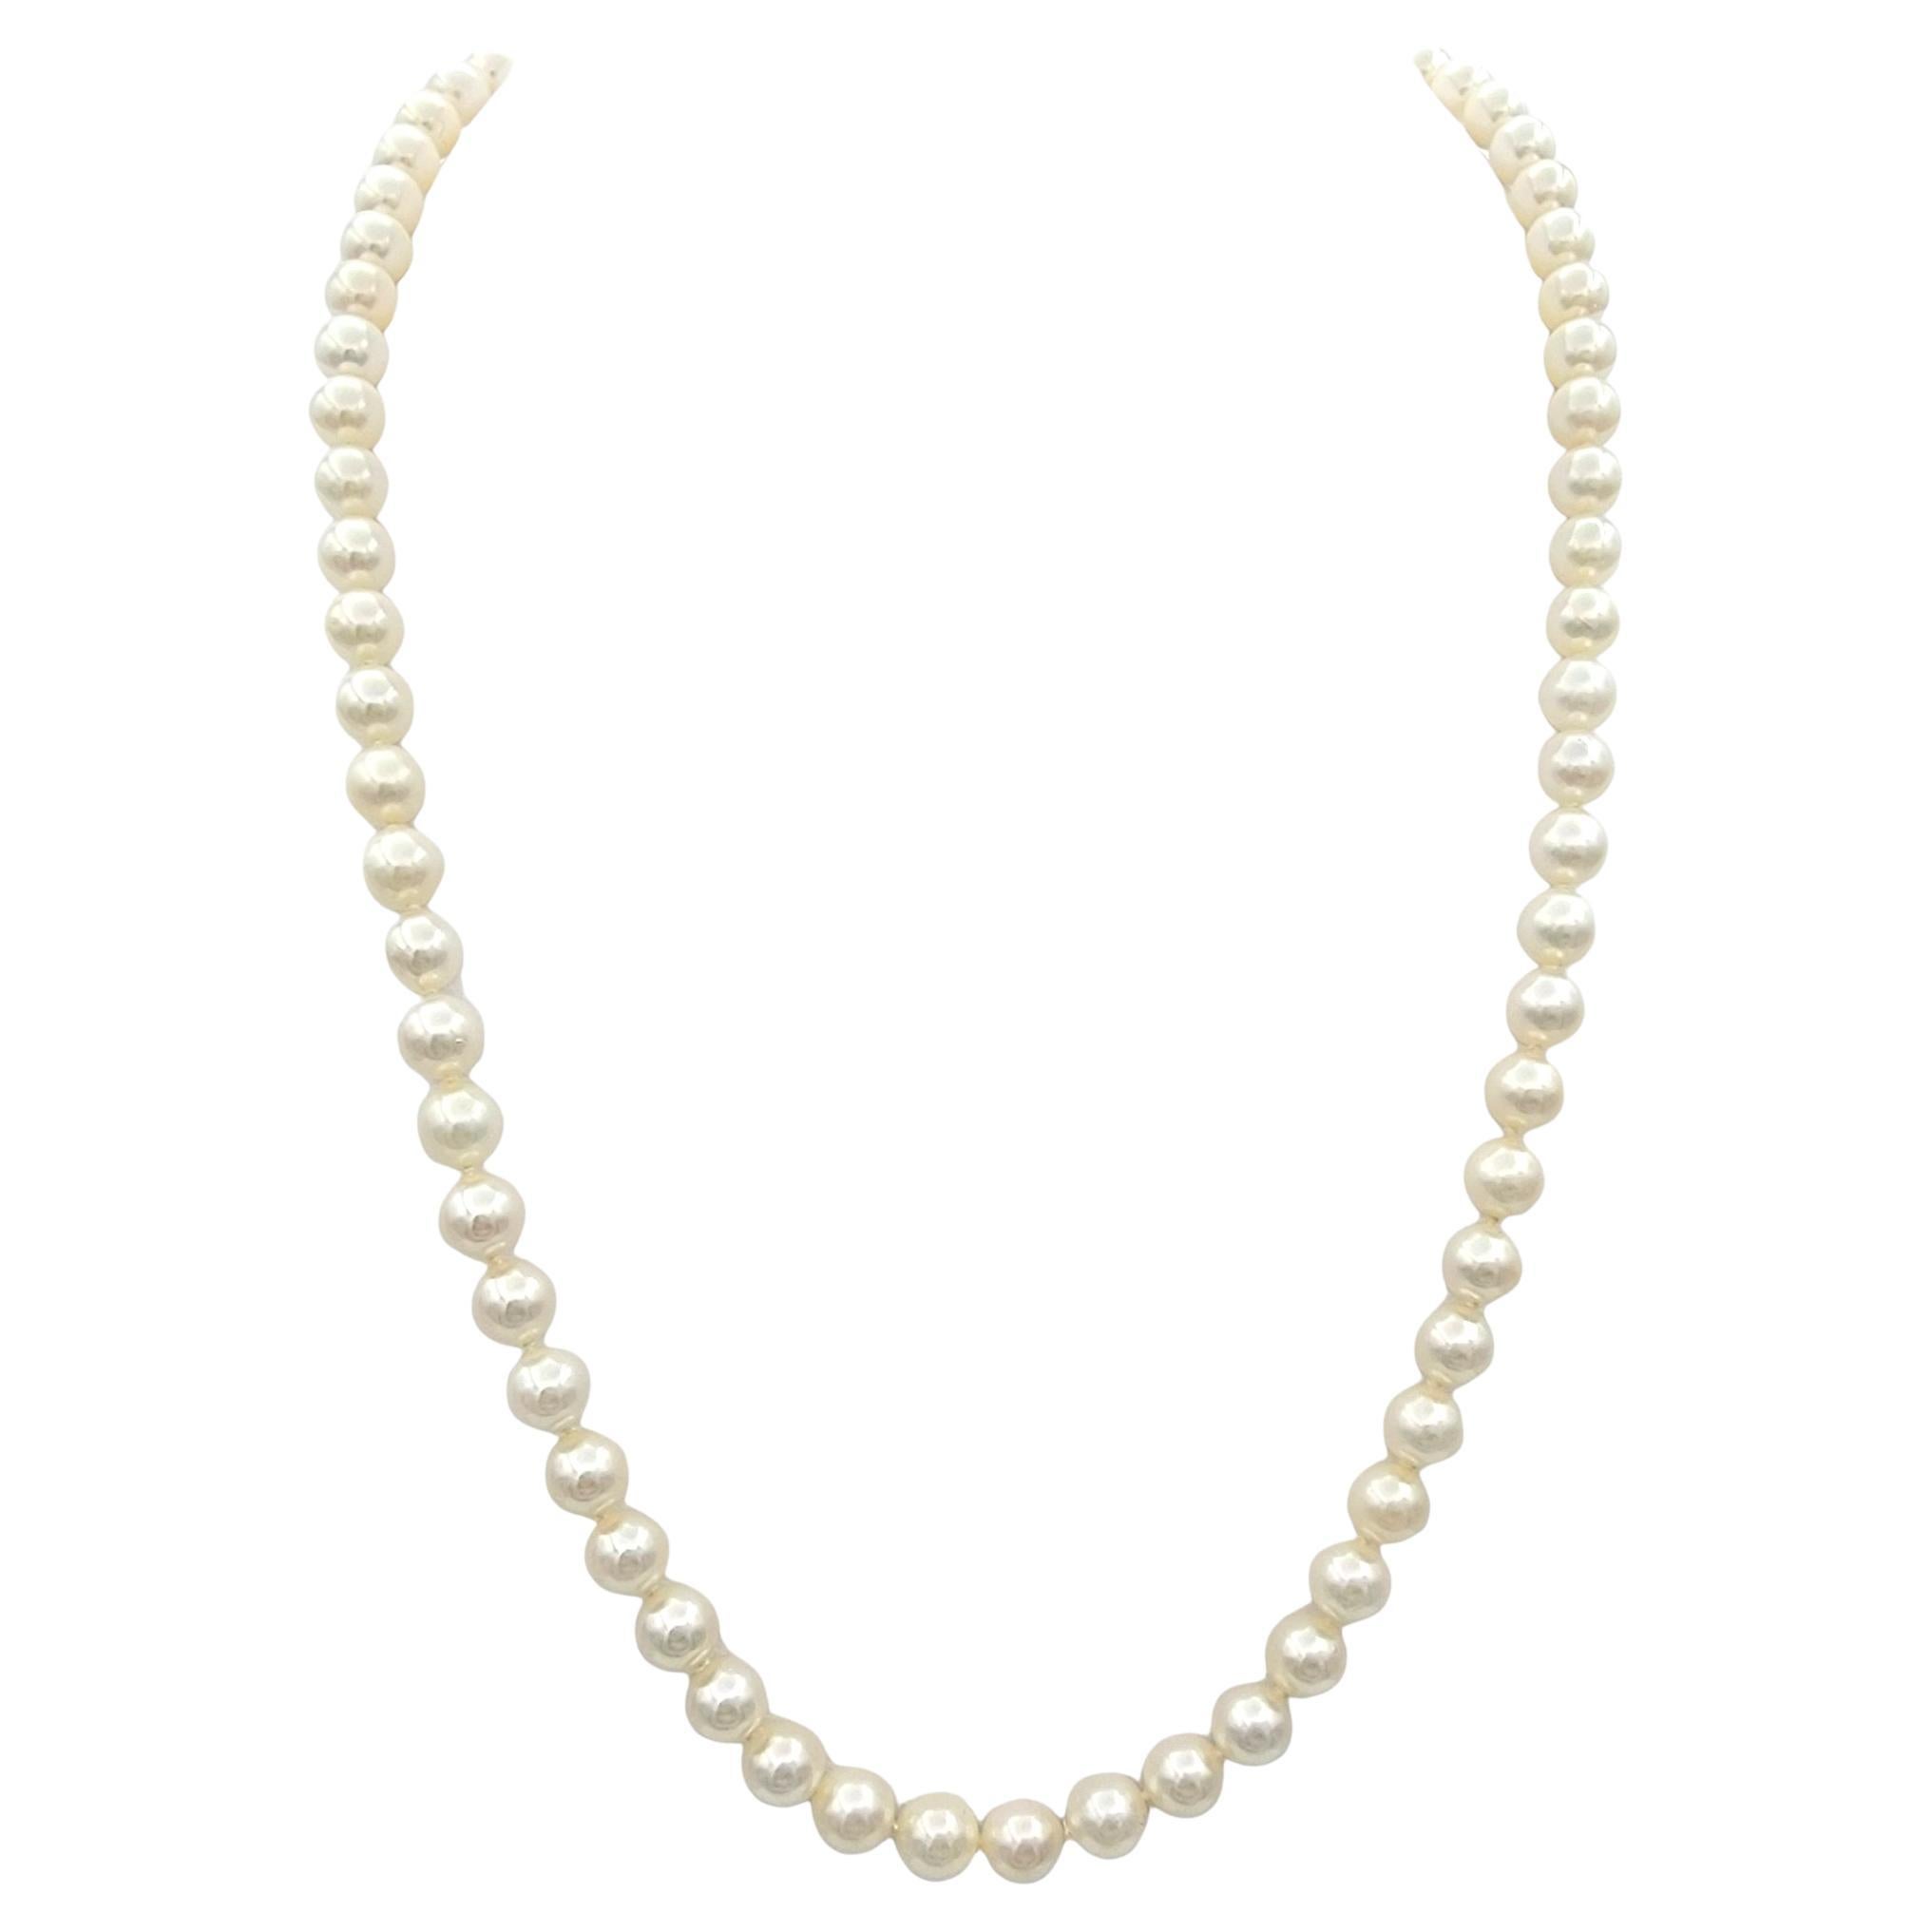 Mikimoto Collier de perles Akoya de culture de 20 pouces avec fermoir en or 18 carats